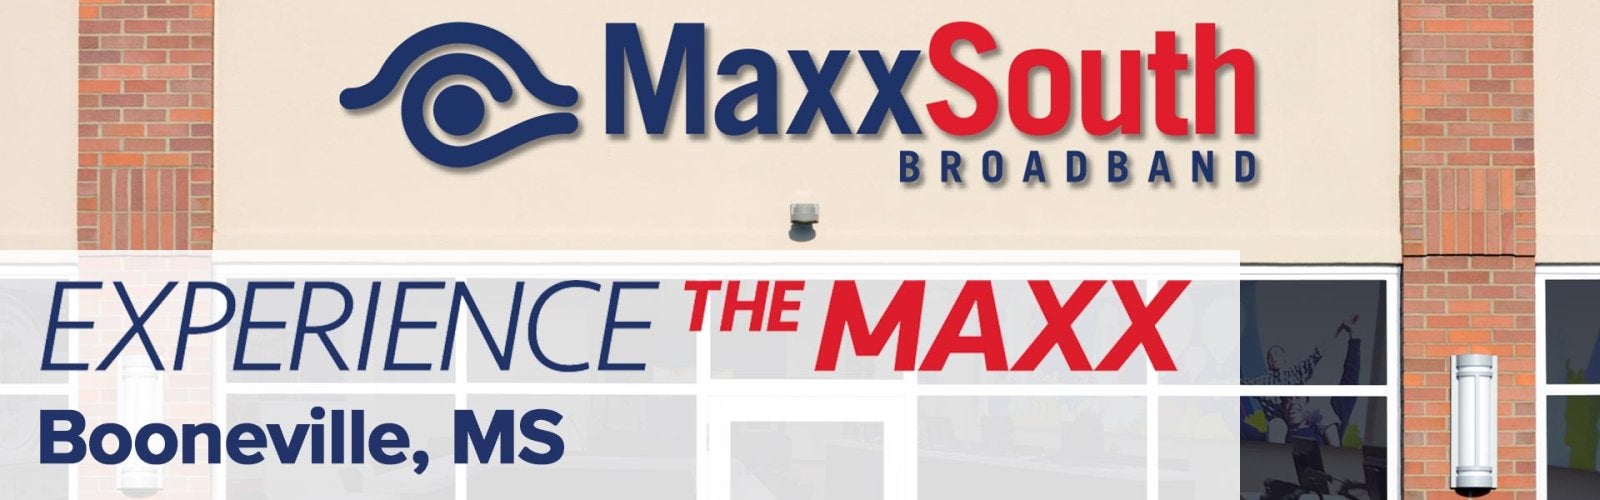 maxxsouth store near me, maxxsouth booneville store, booneville, maxxsouth support